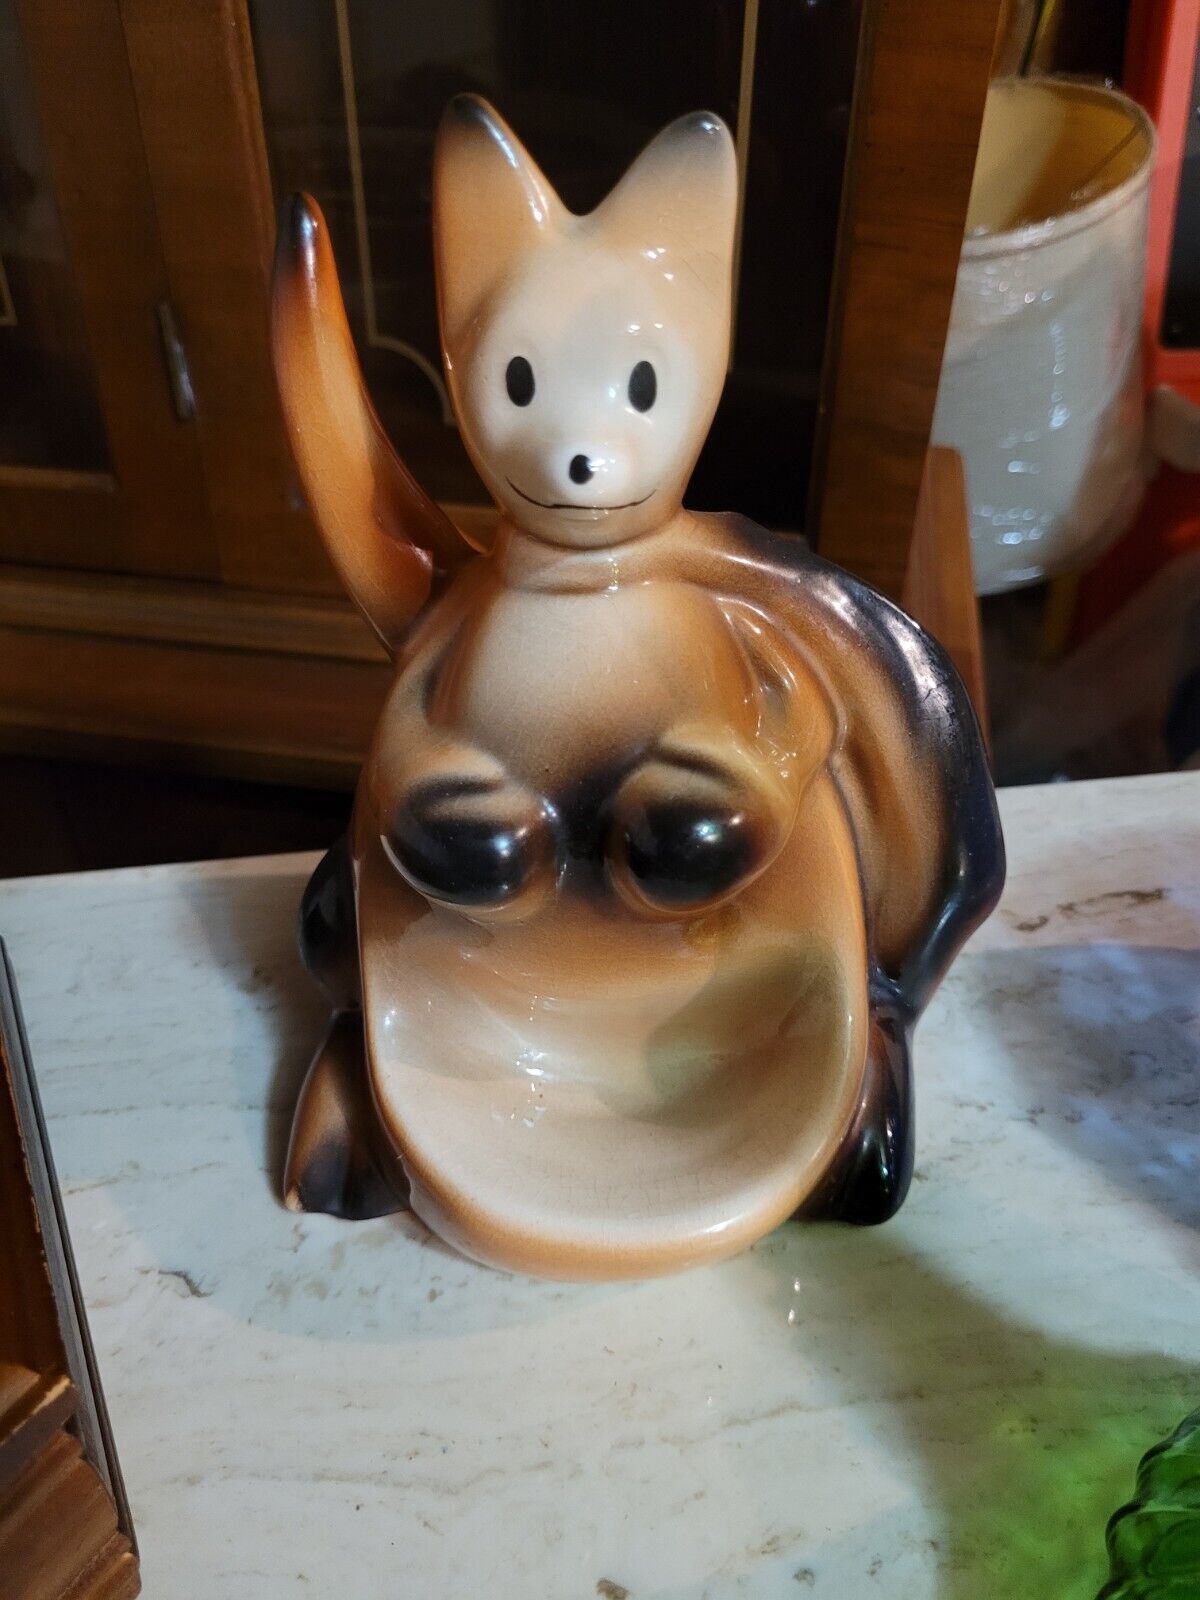 VINTAGE Ceramic Anthropomorphic Boxing Kangaroo Dresser Caddy Dish Pulp Fiction